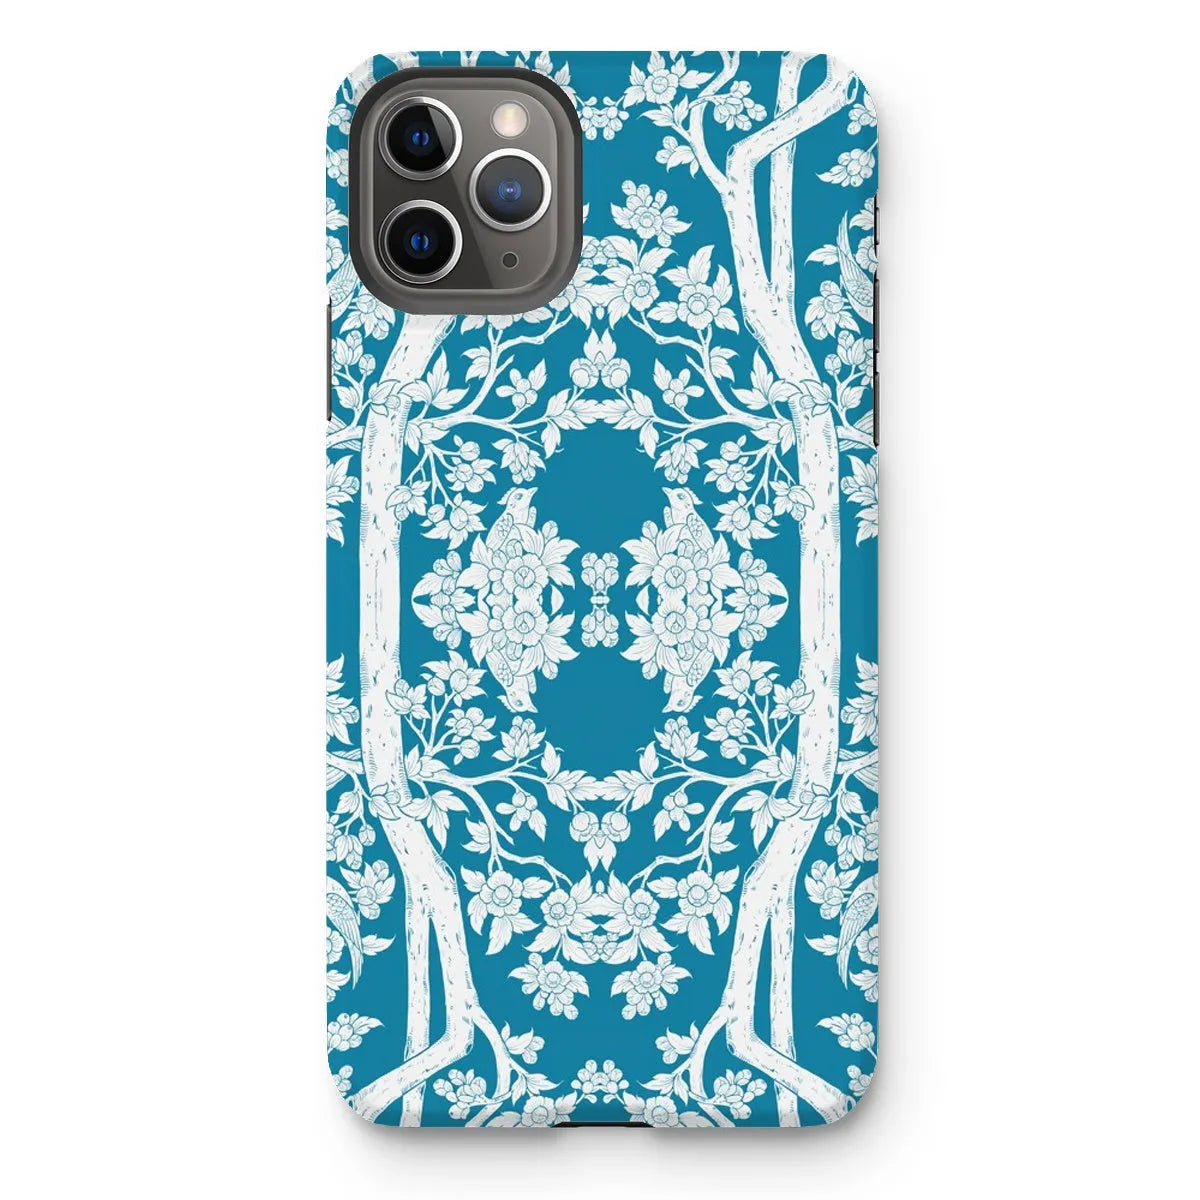 Aviary Blue Aesthetic Pattern Art Phone Case - Iphone 11 Pro Max / Matte - Mobile Phone Cases - Aesthetic Art